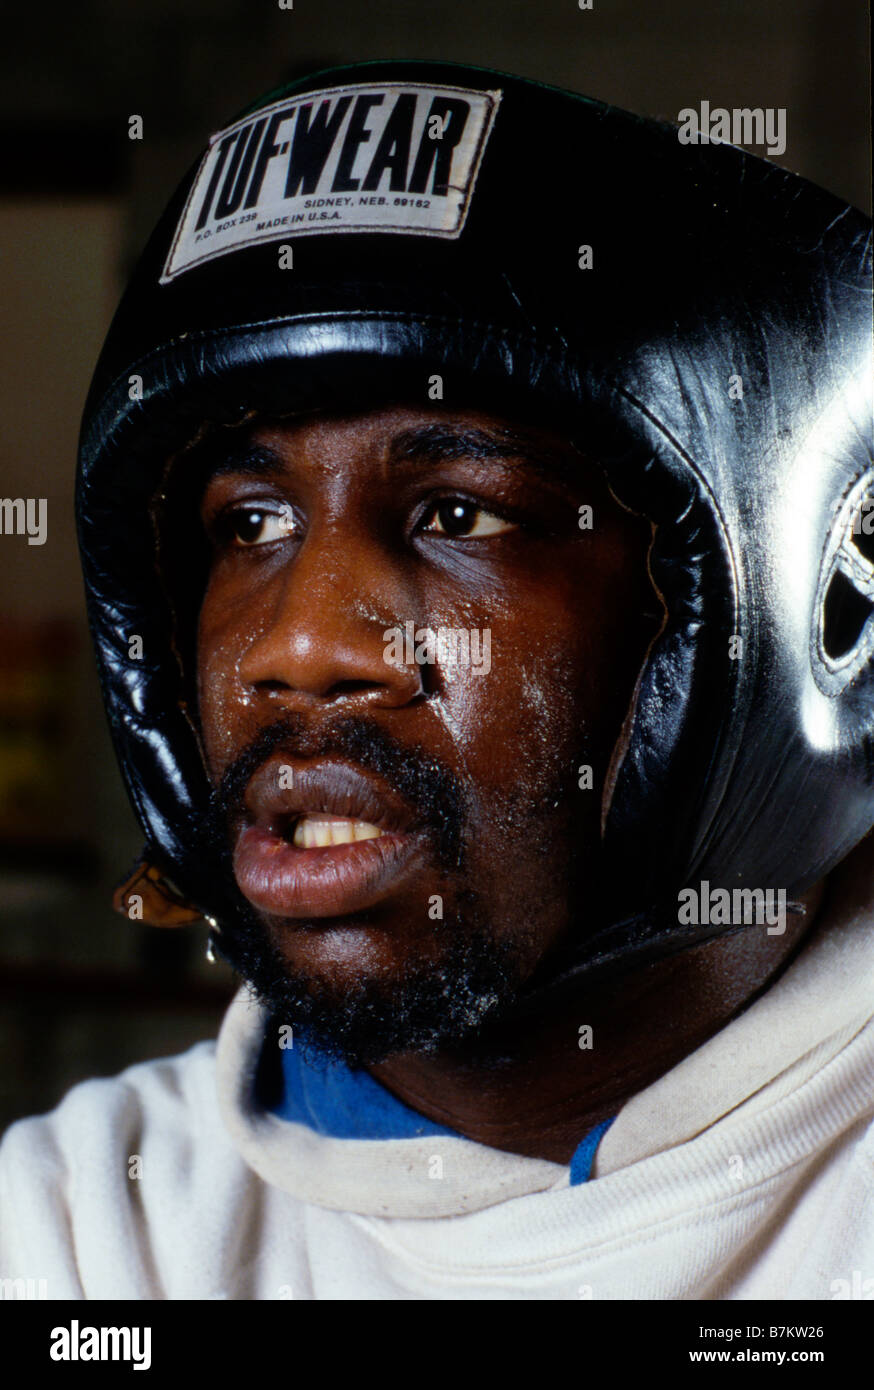 Boxer portrait with headgear Stock Photo